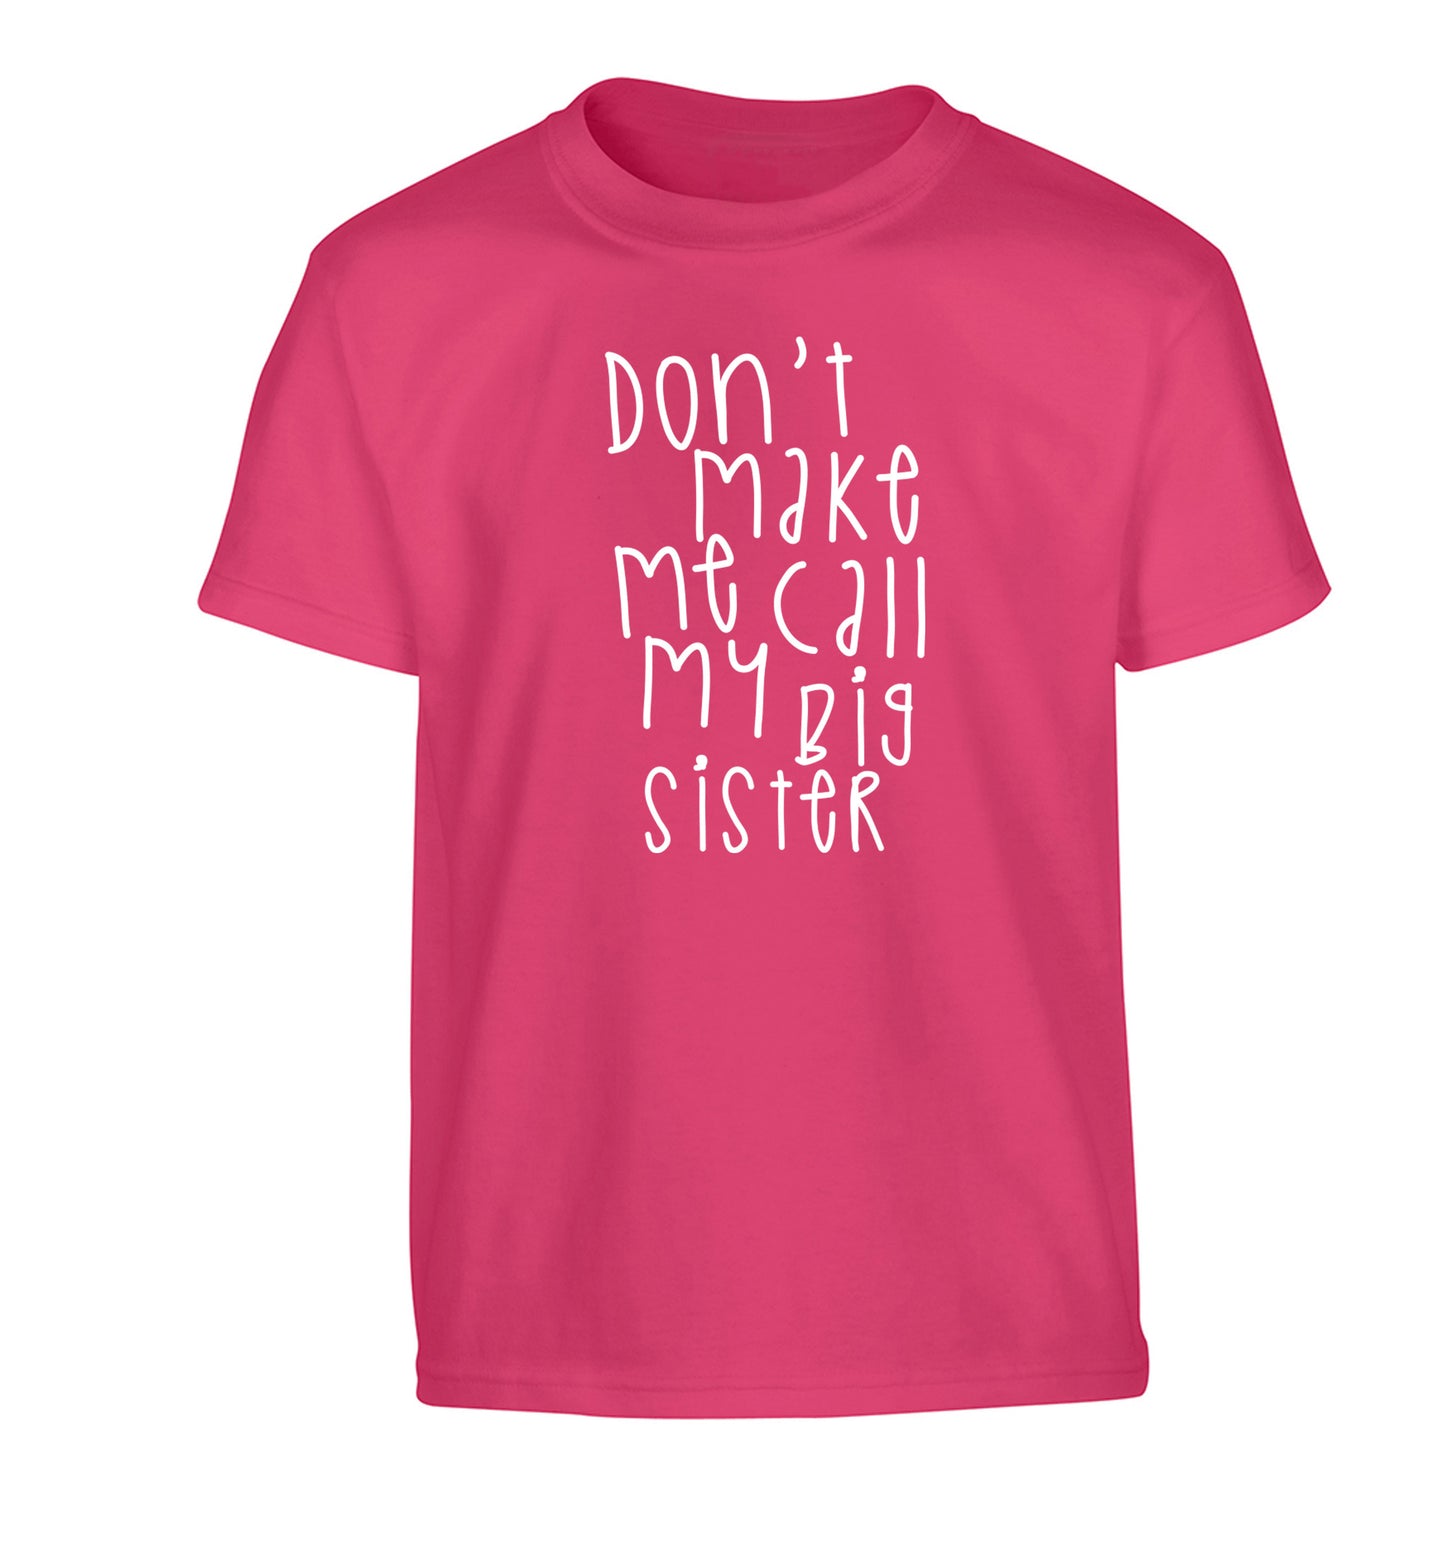 Don't make me call my big sister Children's pink Tshirt 12-14 Years